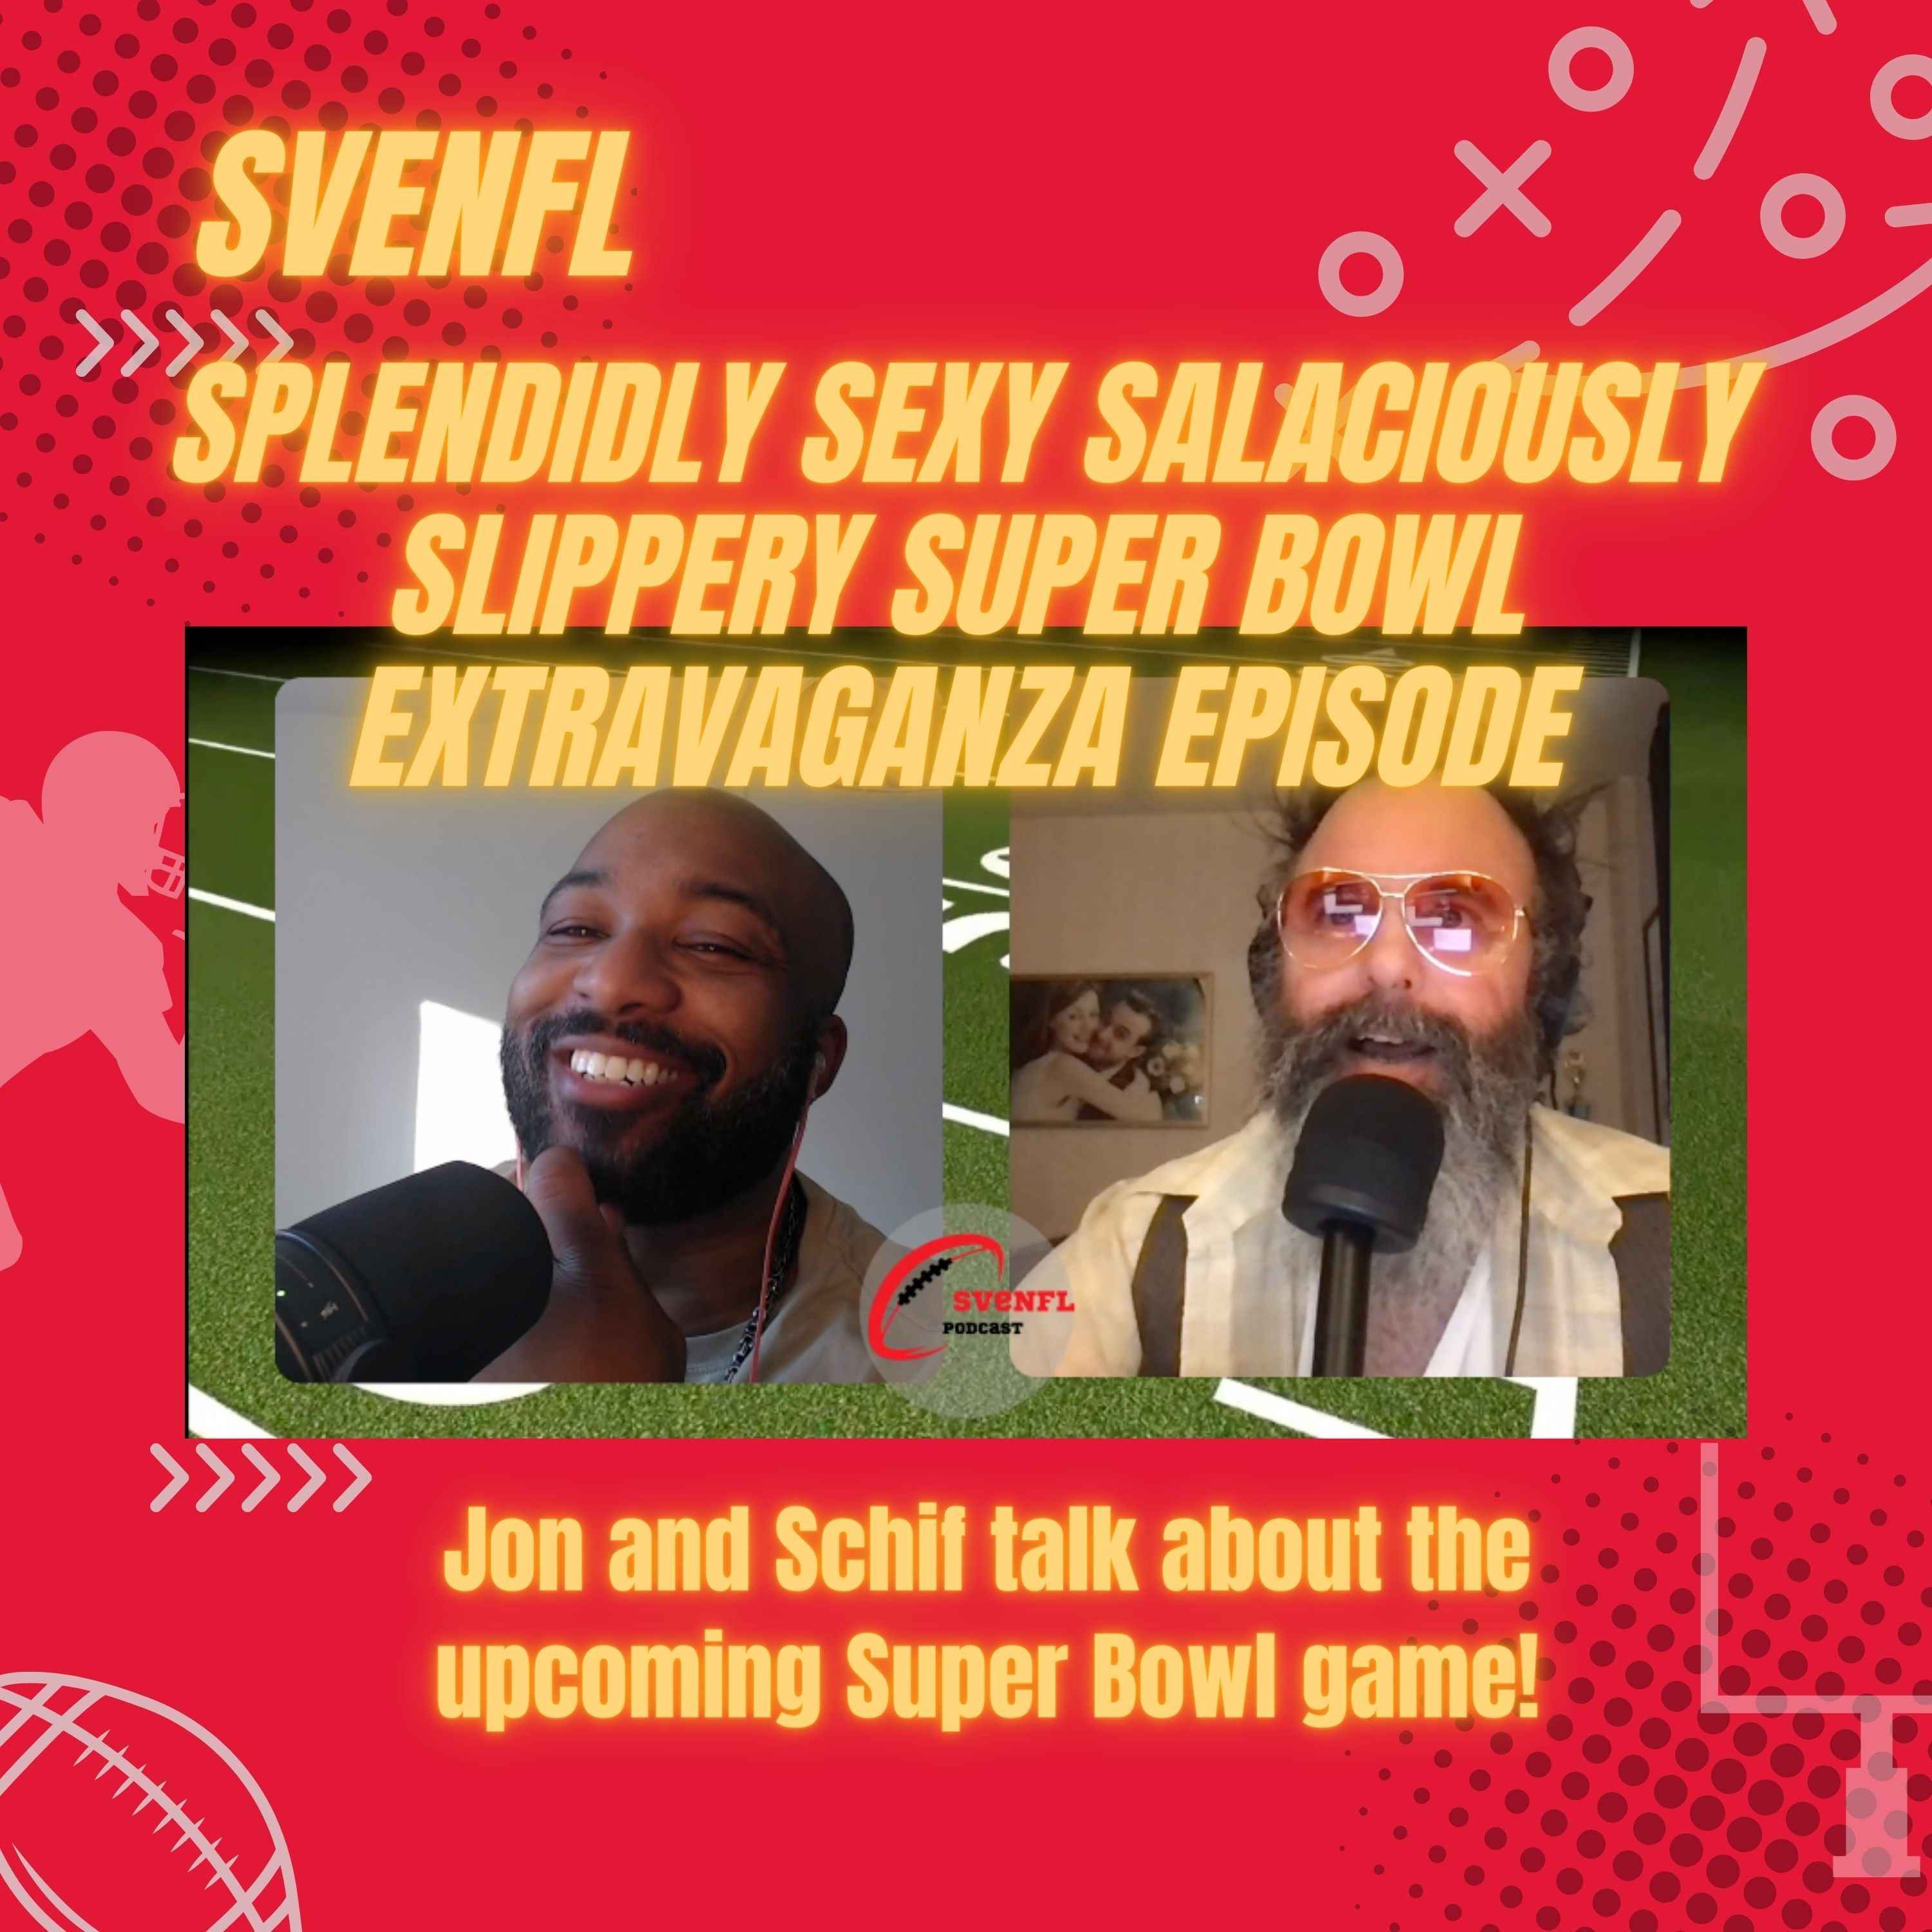 SveNFL Splendidly Sexy Salaciously Slippery Super Bowl Extravaganza Episode